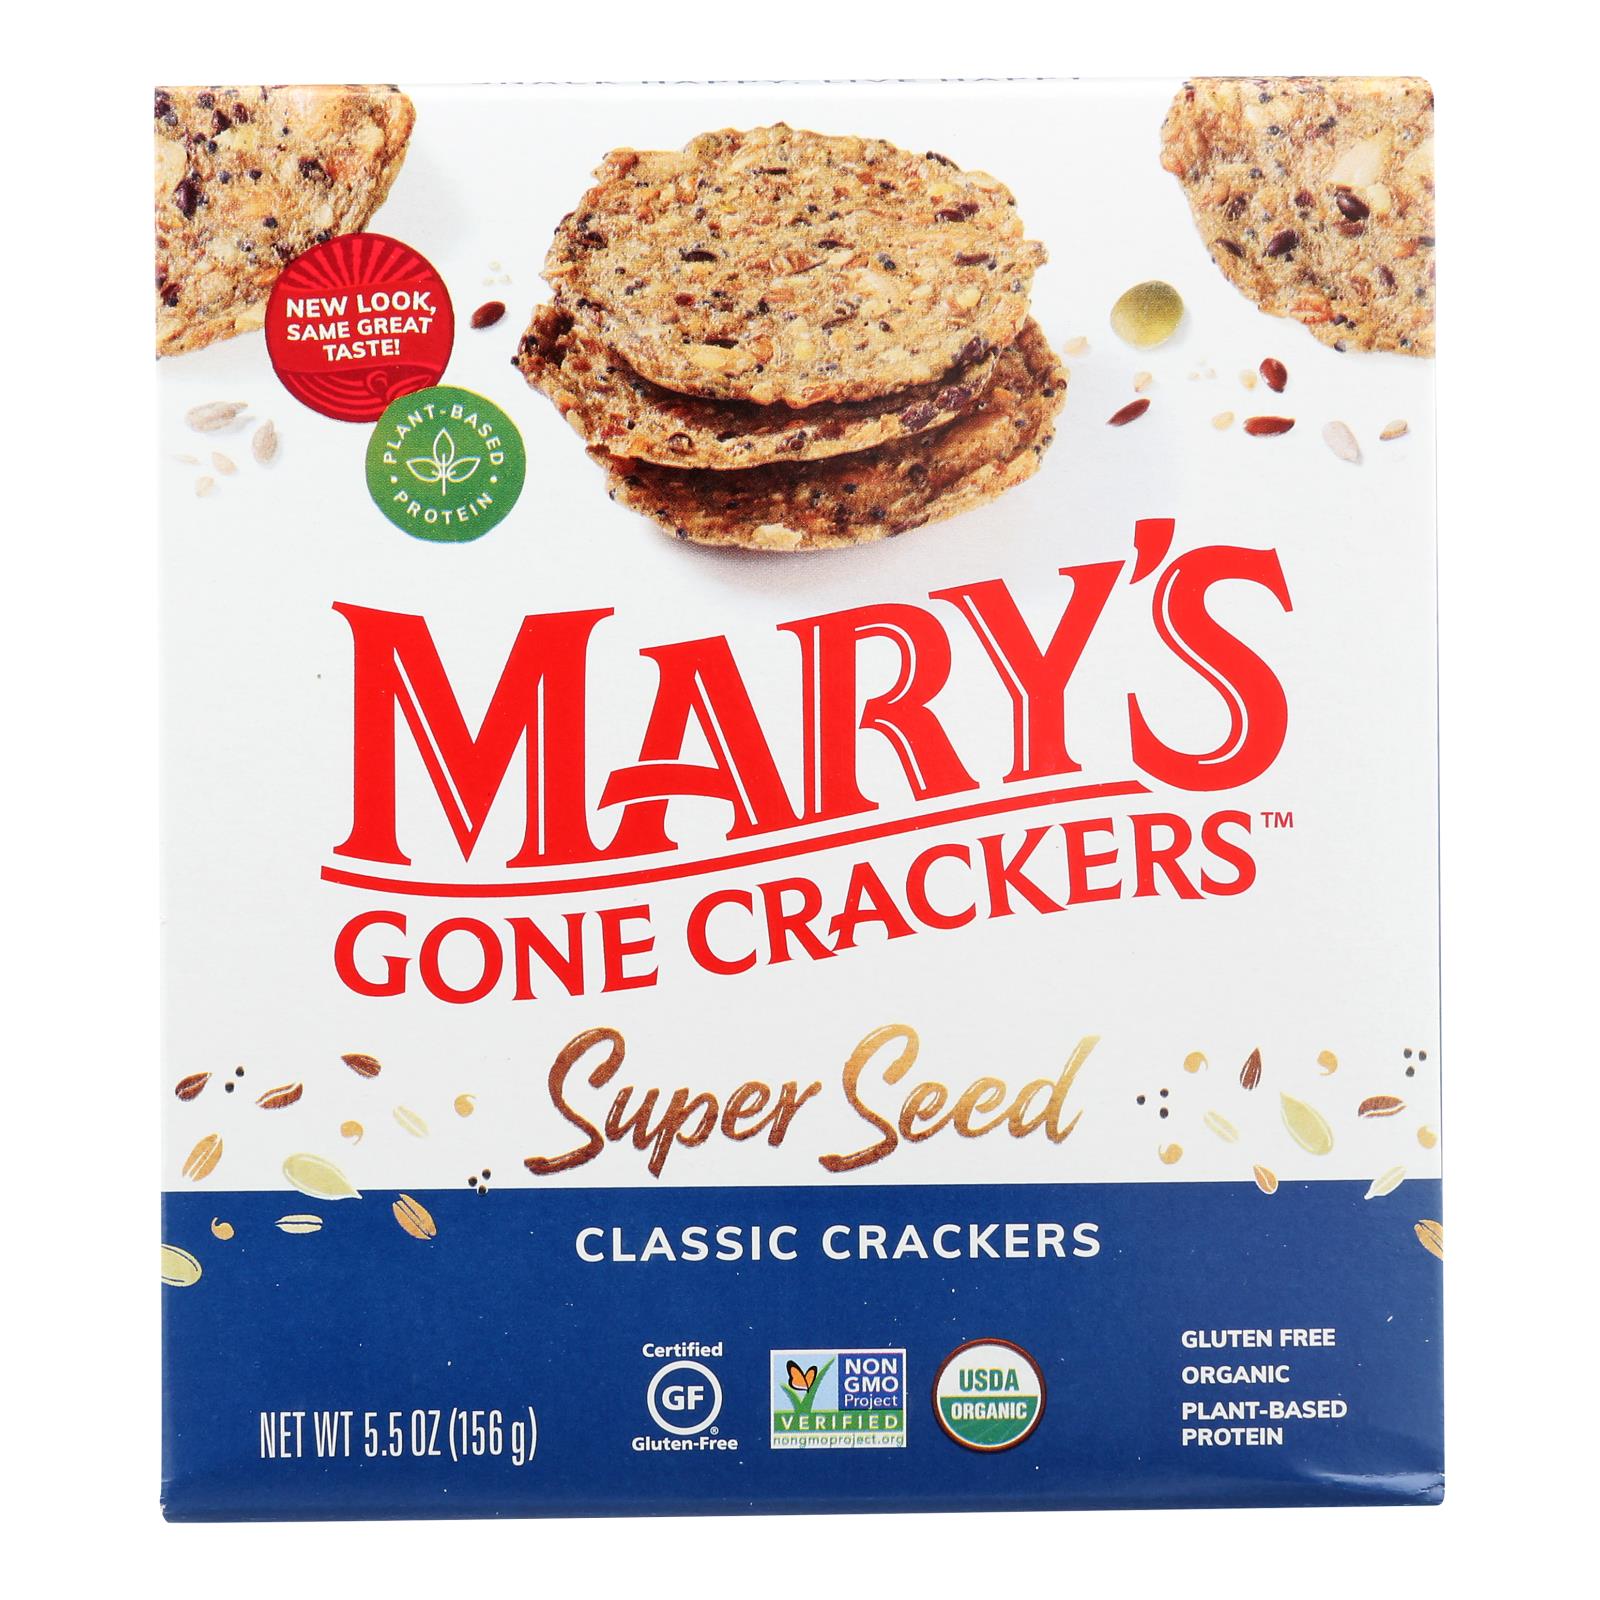 Craquelins de Mary's Gone, Mary's Gone Crackers Super Seed - Everything - Caisse de 6 - 5.5 oz (paquet de 6)